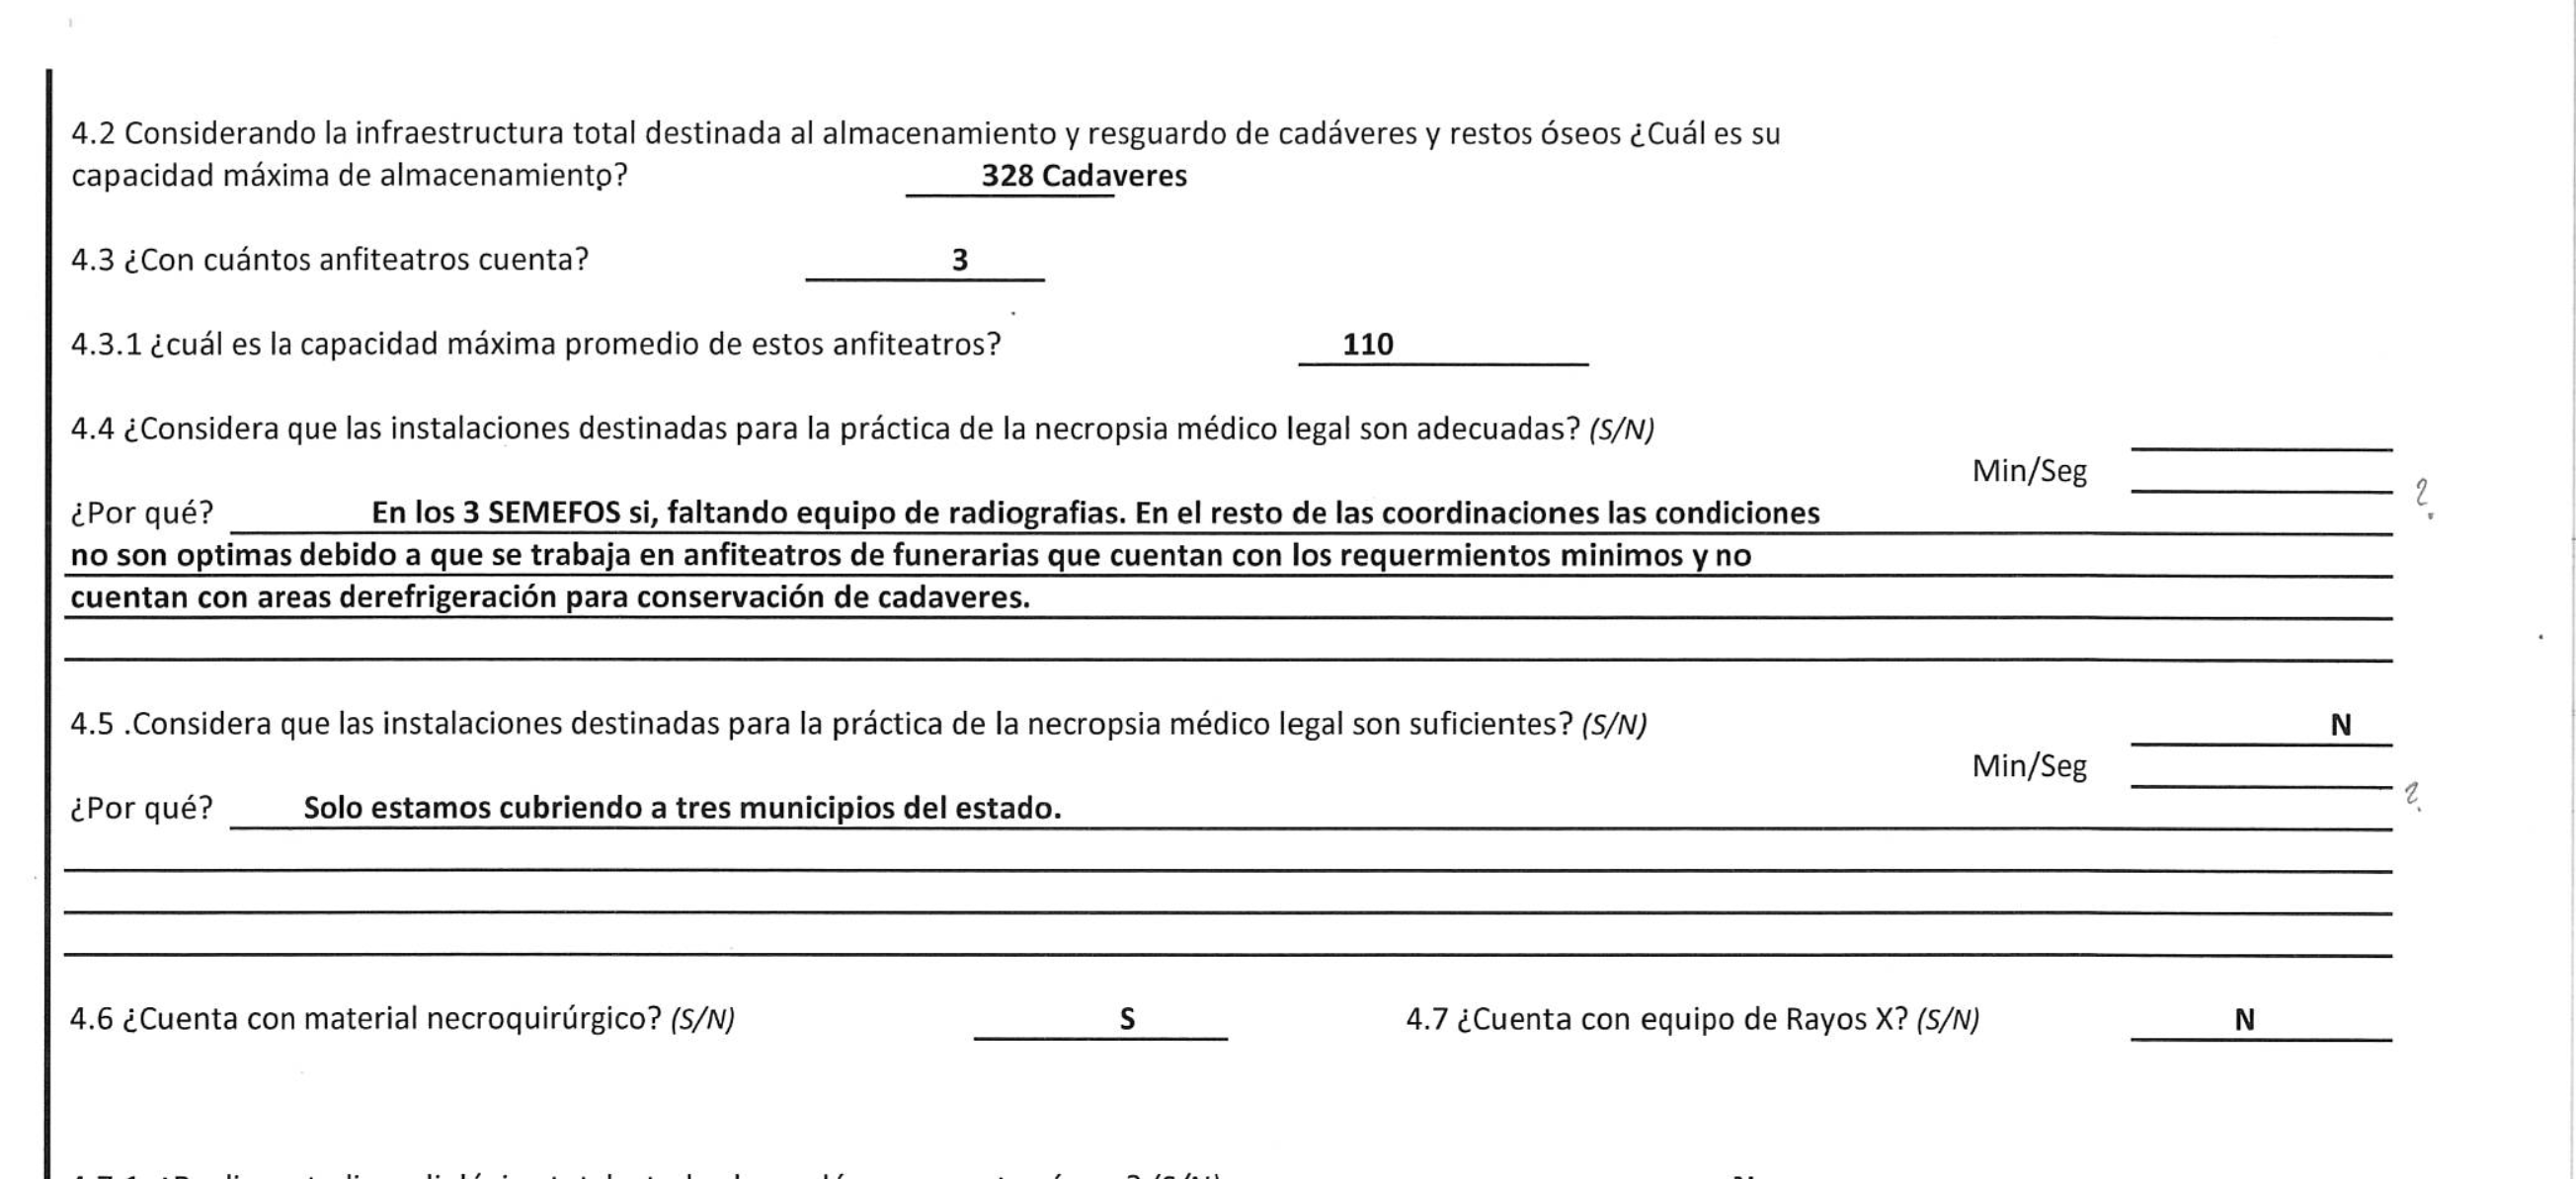 Imagen 1. Cuestionario respondido por autoridades forenses de Tamaulipas. Crédito Documentos obtenidos vía solicitudes de información pública